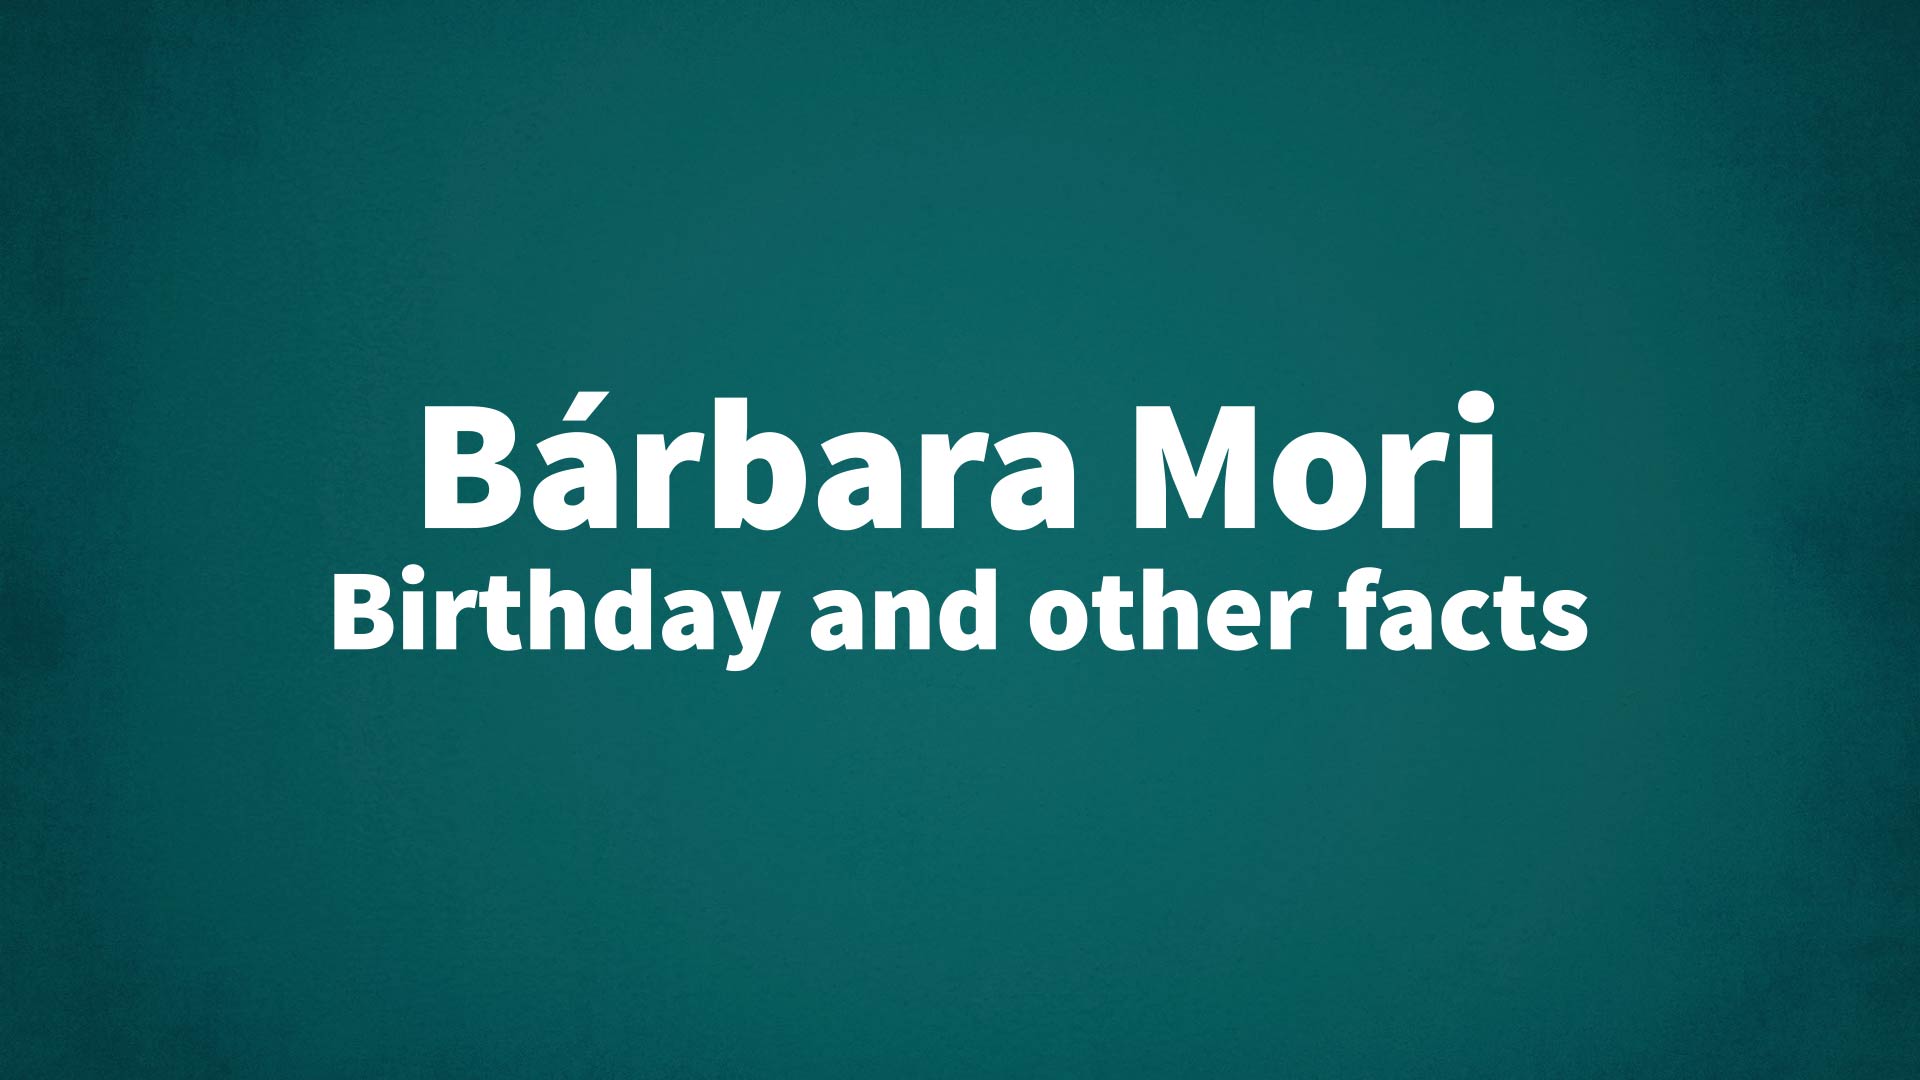 Barbara Mori - Twitter - wide 1